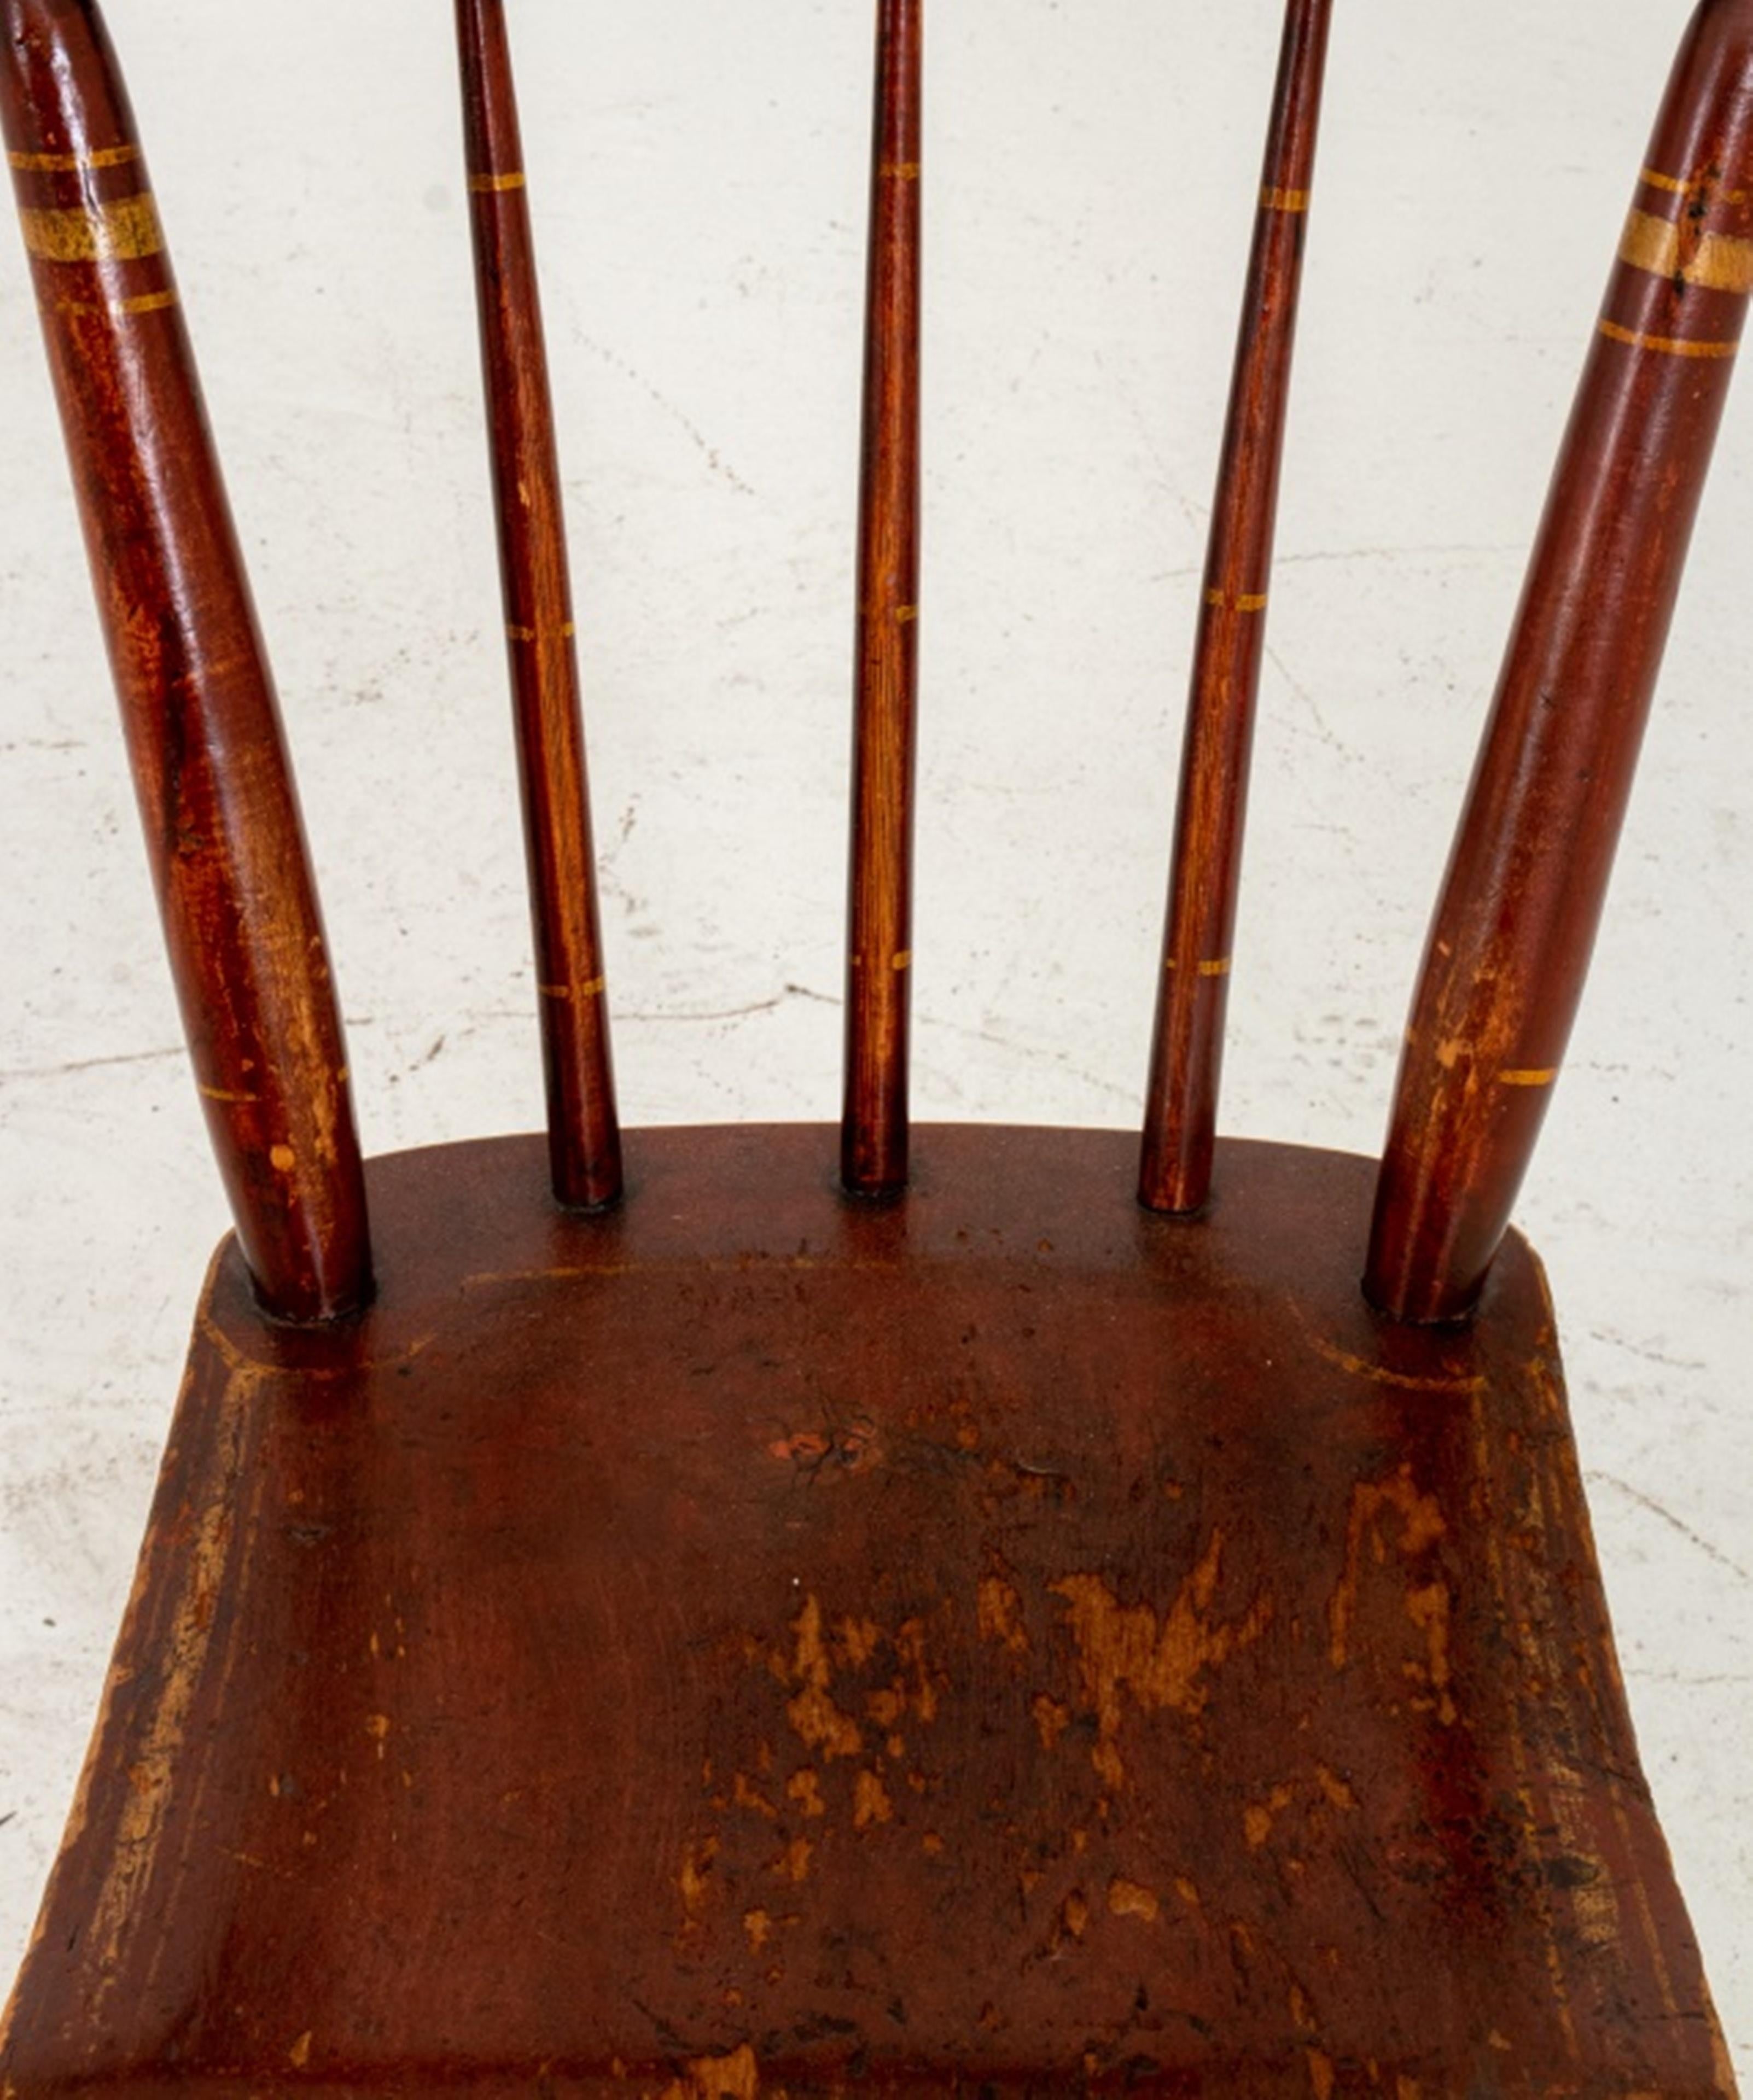 20th Century American Folk Art Style Chairs, 4